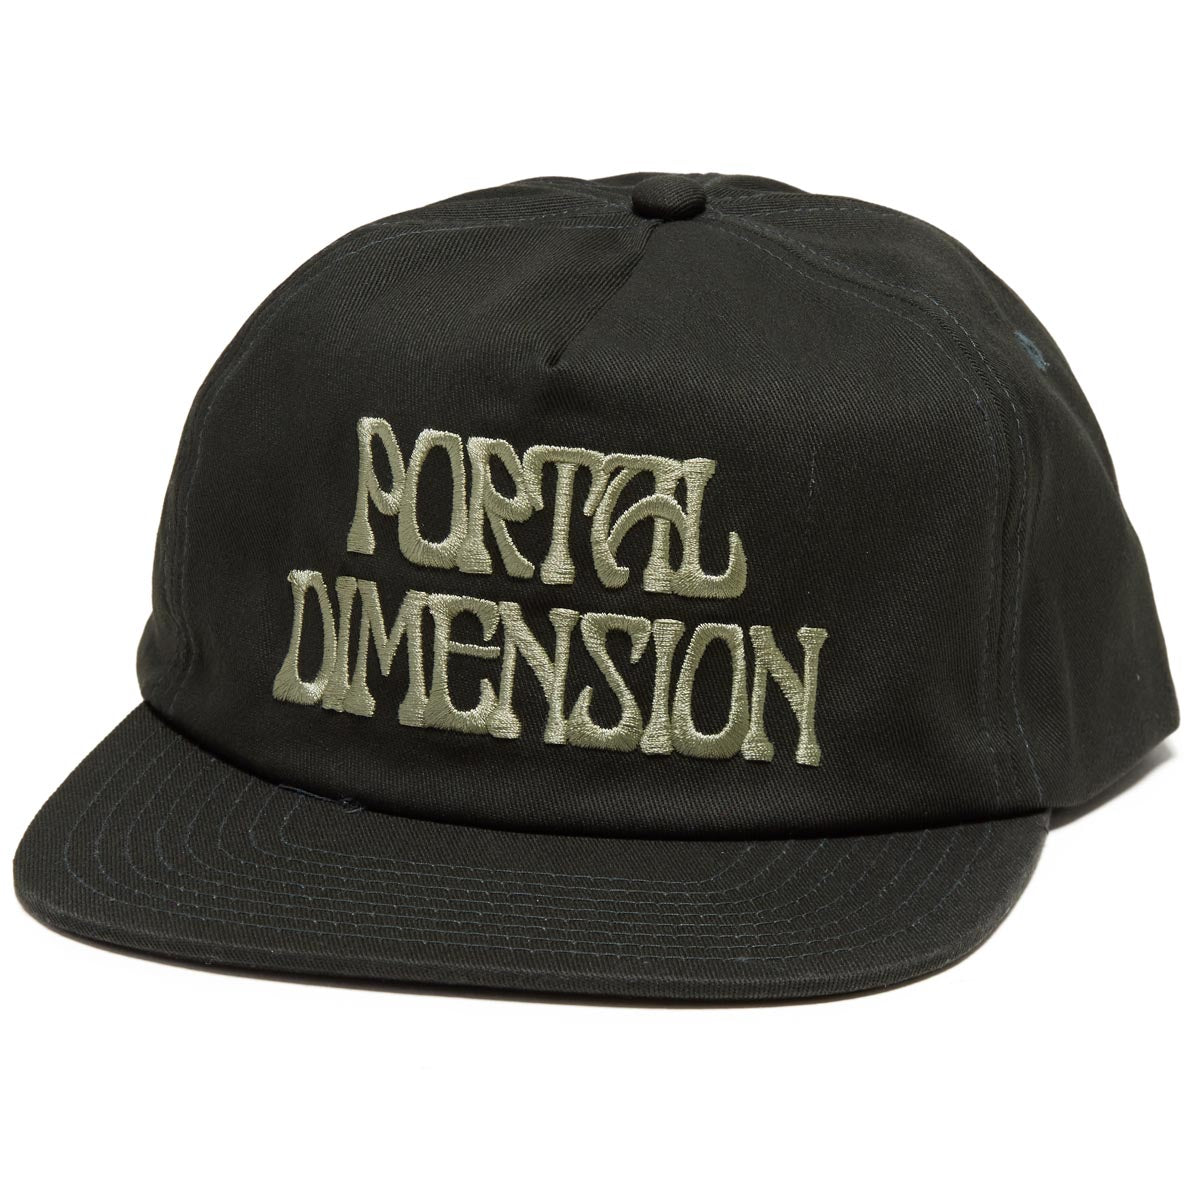 Portal Dimension Logo Hat - Forest Green image 1